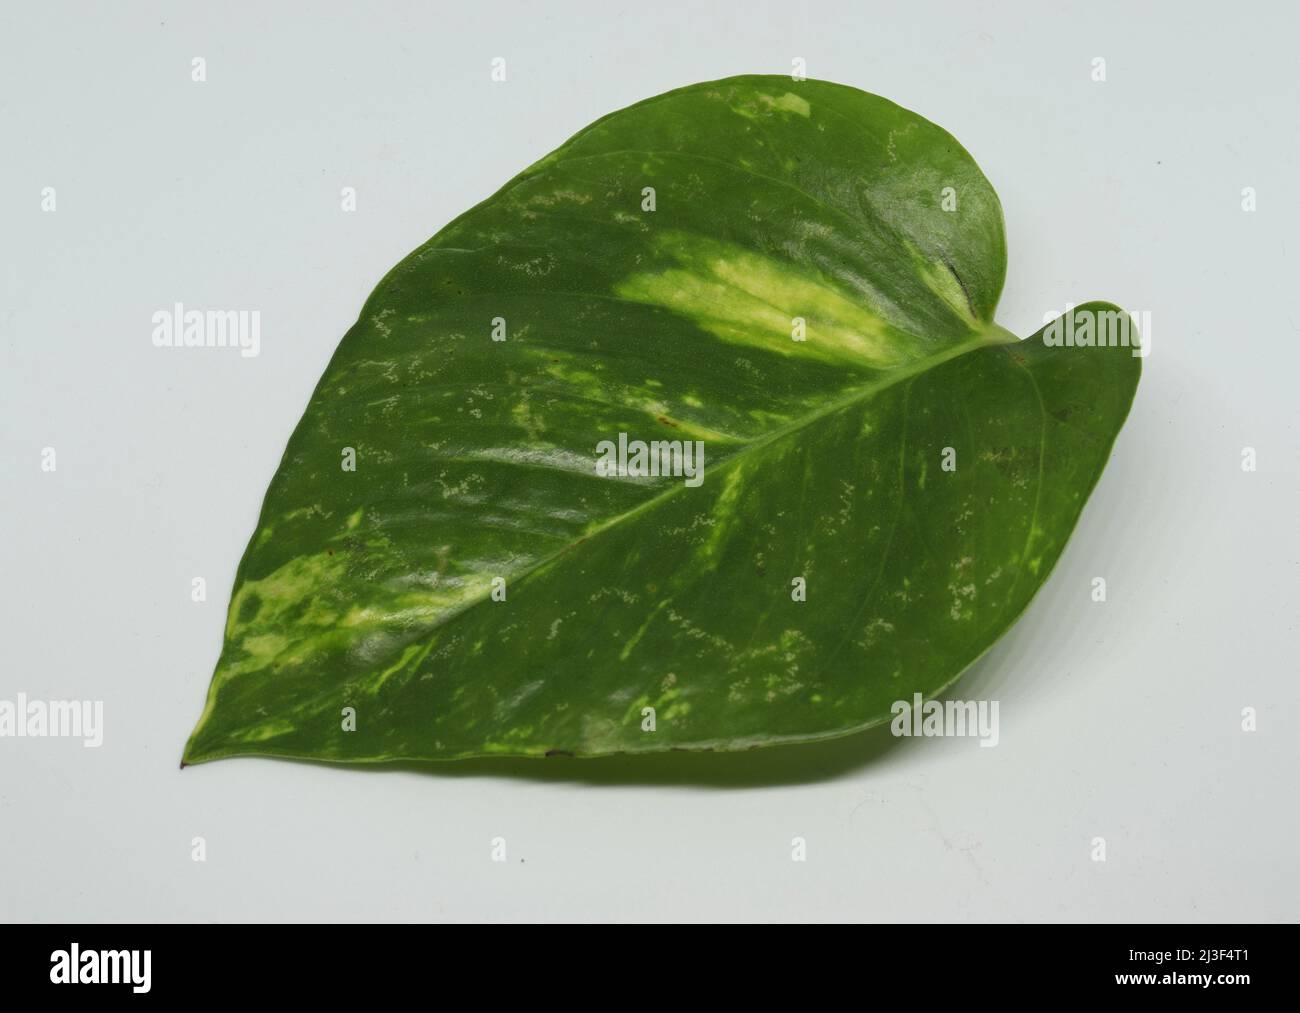 money plant leaf. with white background Stock Photo